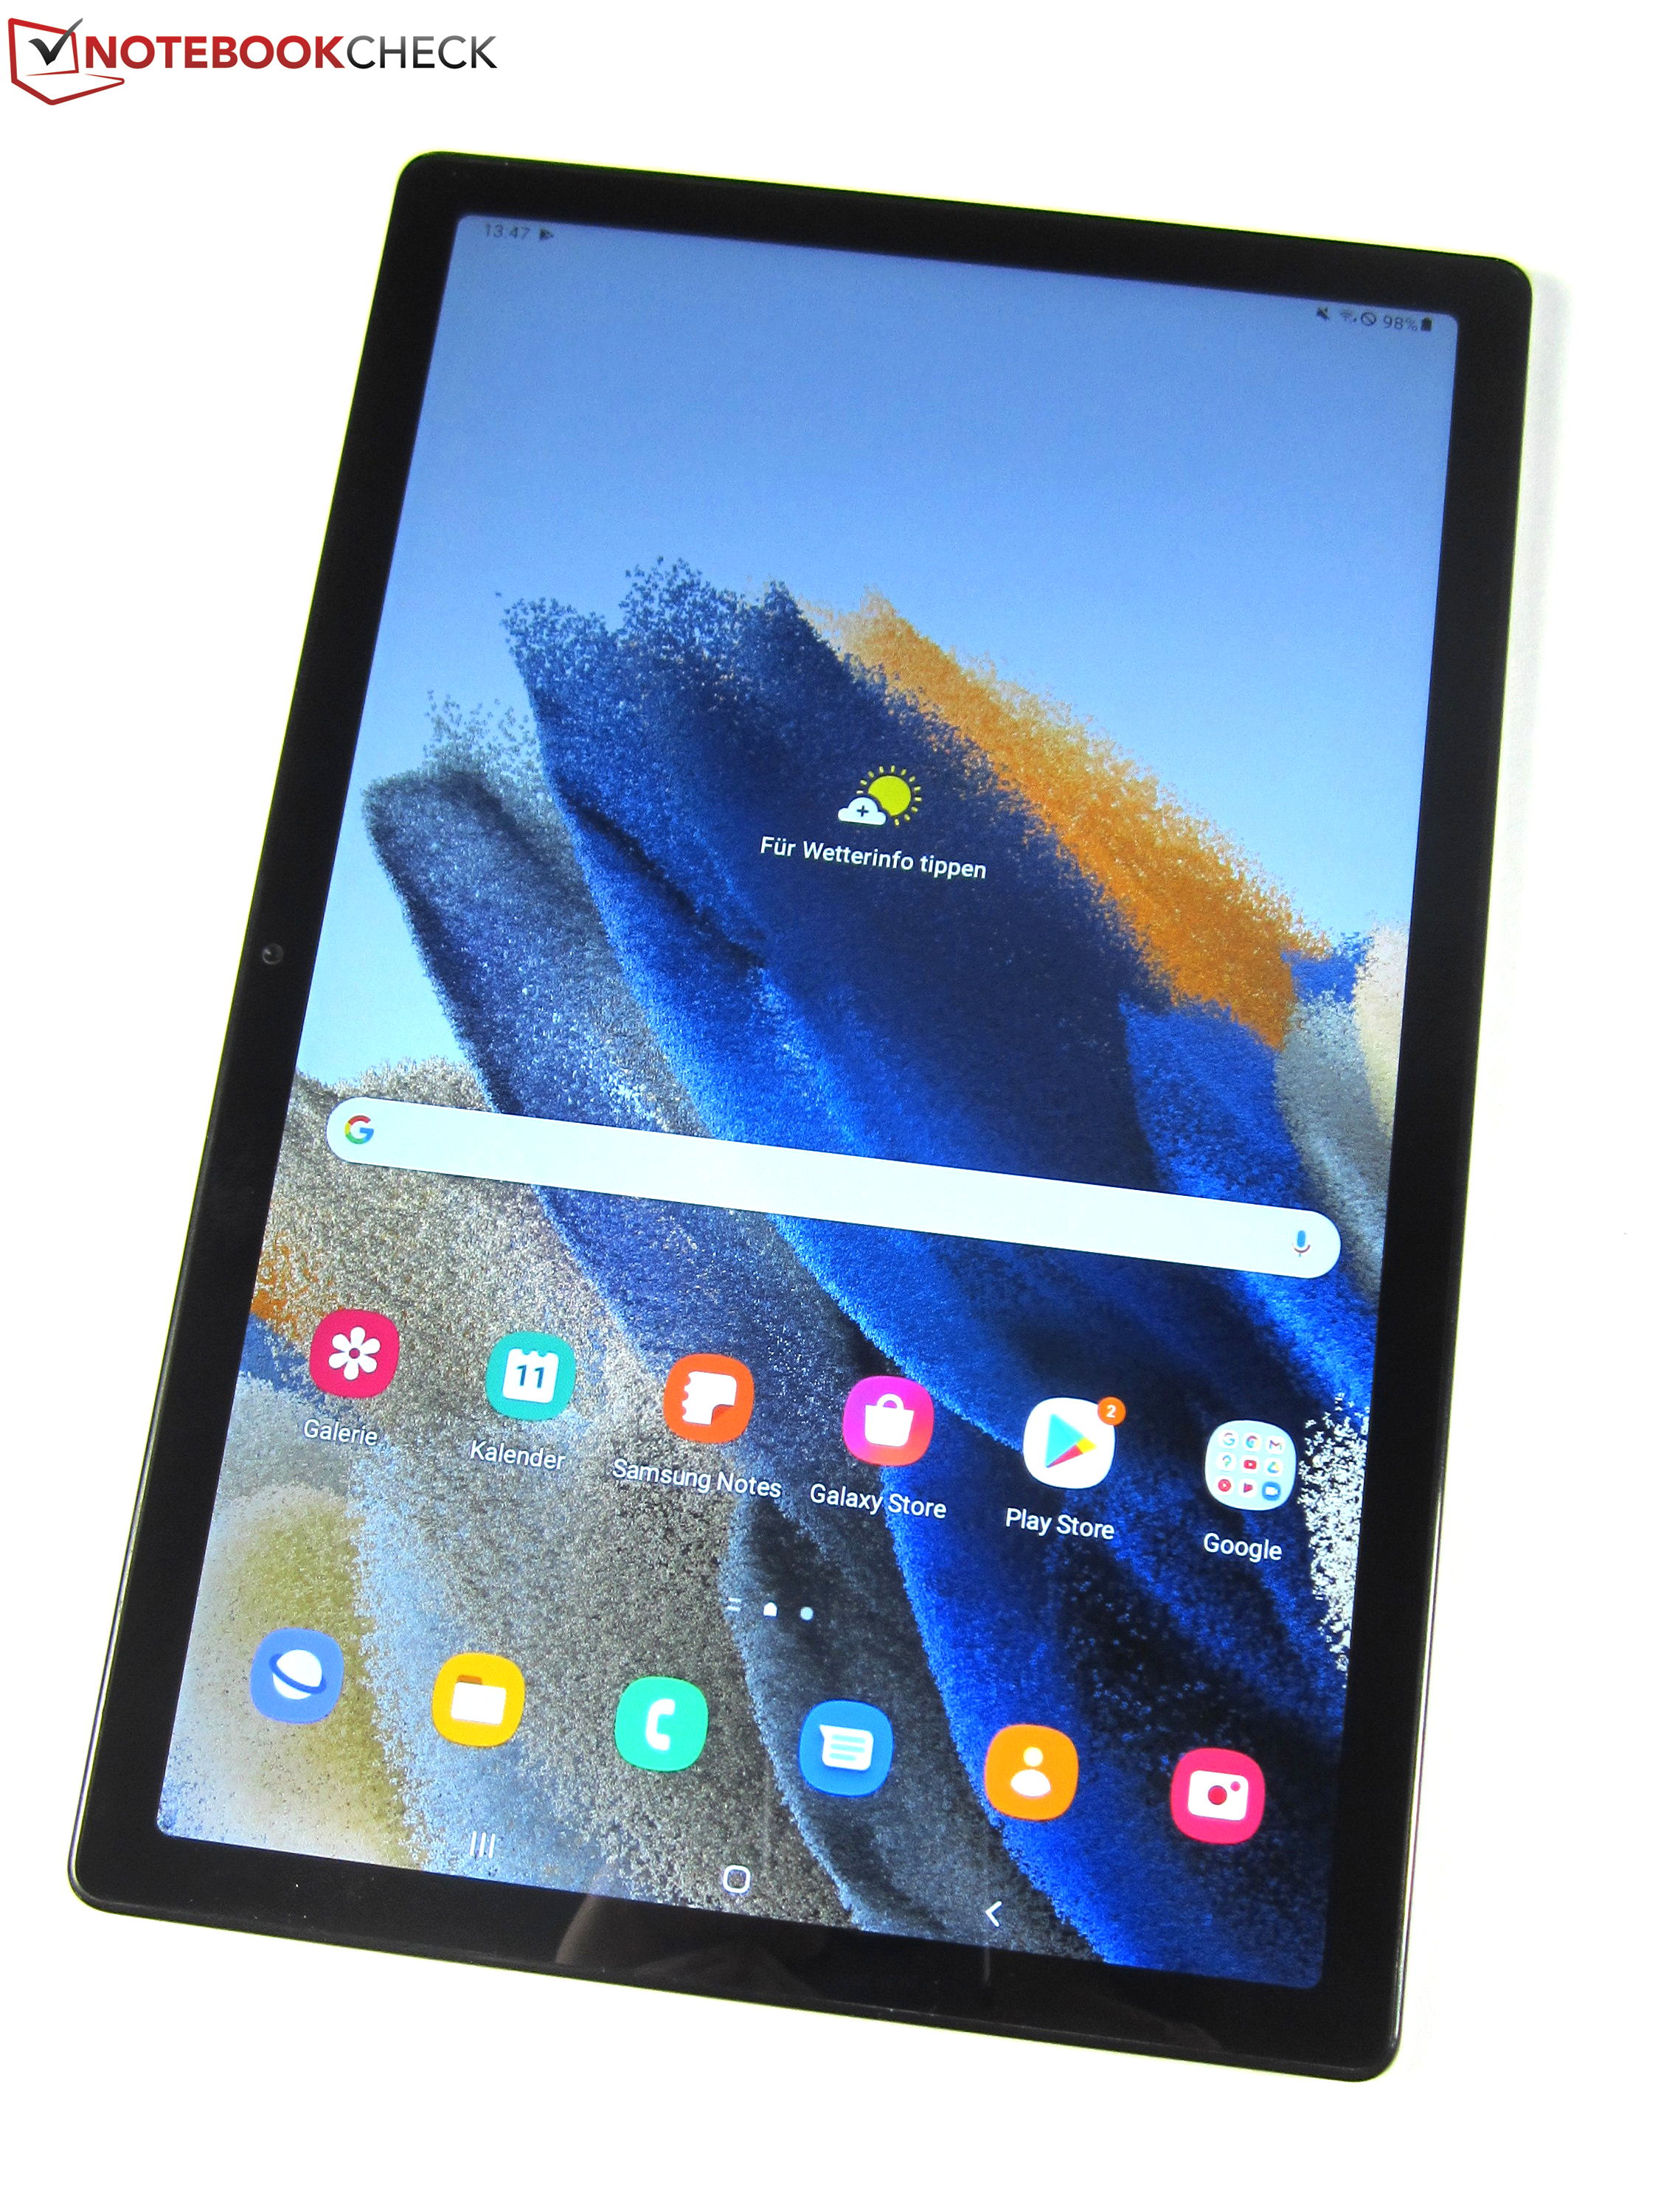 Comparatif des tablettes Microsoft Surface, iPad, Galaxy Note et